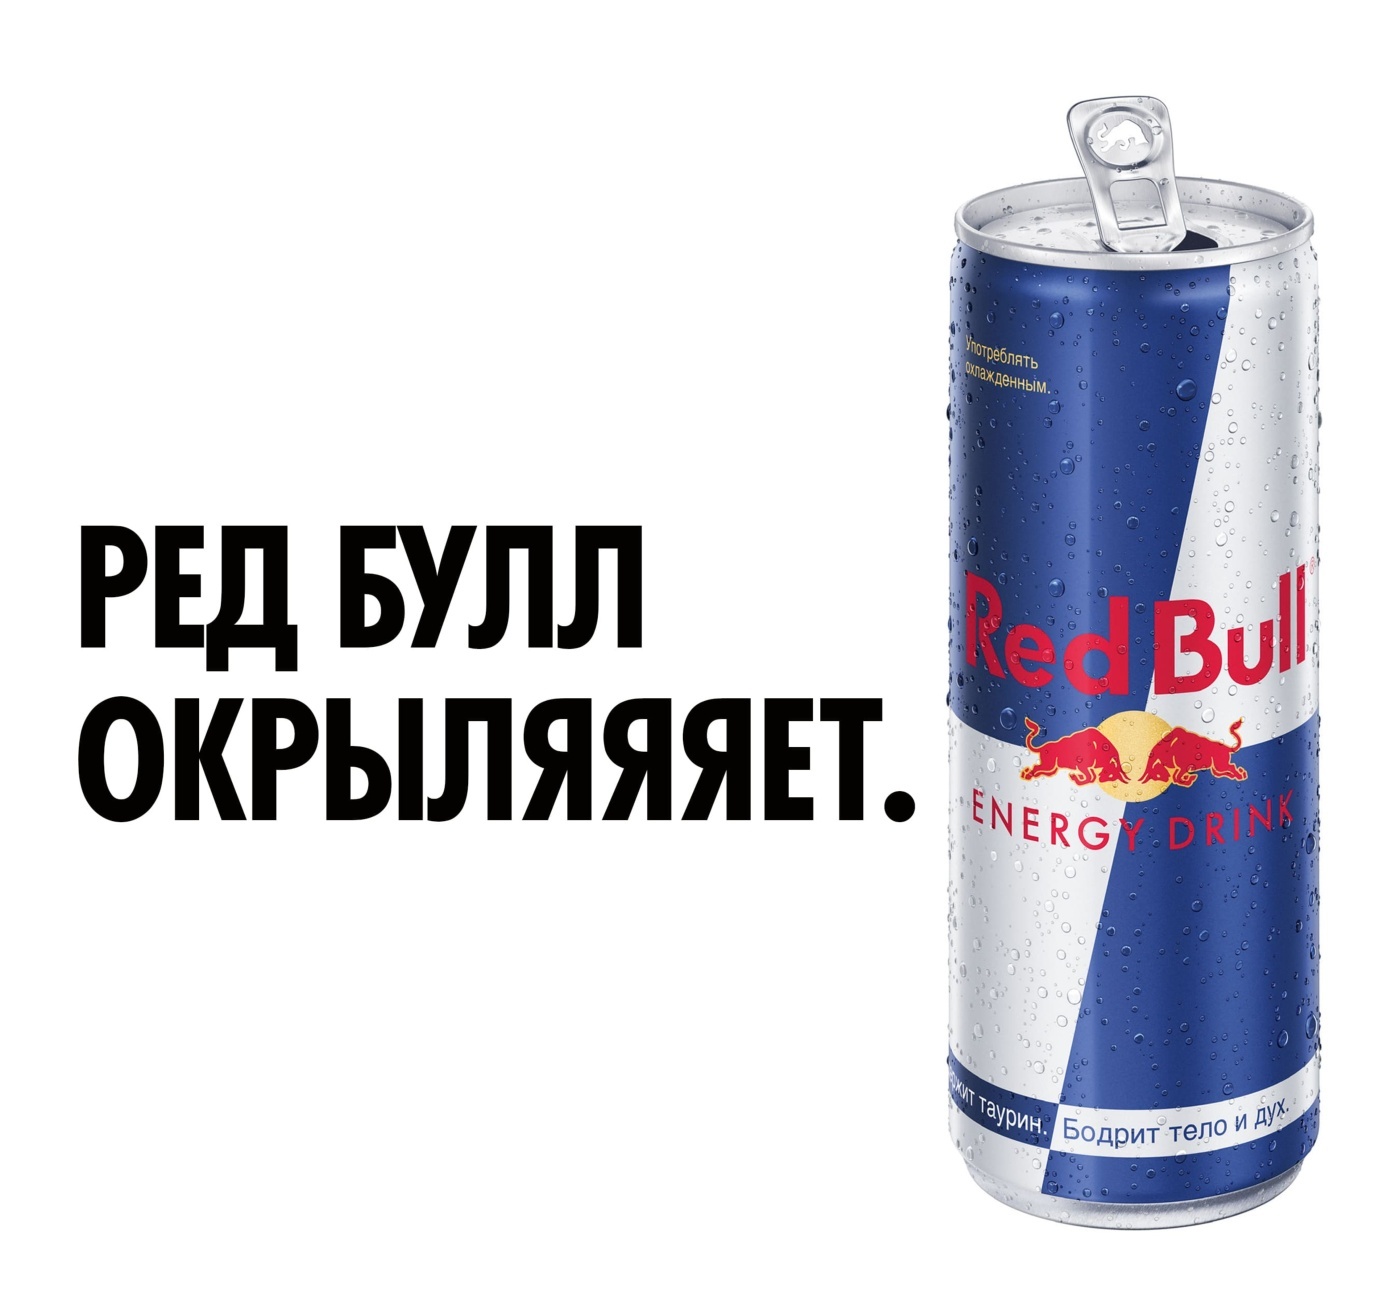 Red bull цена. Энергетический напиток Red bull 473 мл., ж/б. Напиток Red bull Энергетик.473мл. Напиток Red bull 0,355л ж/б. Напиток Red bull 0,473л.